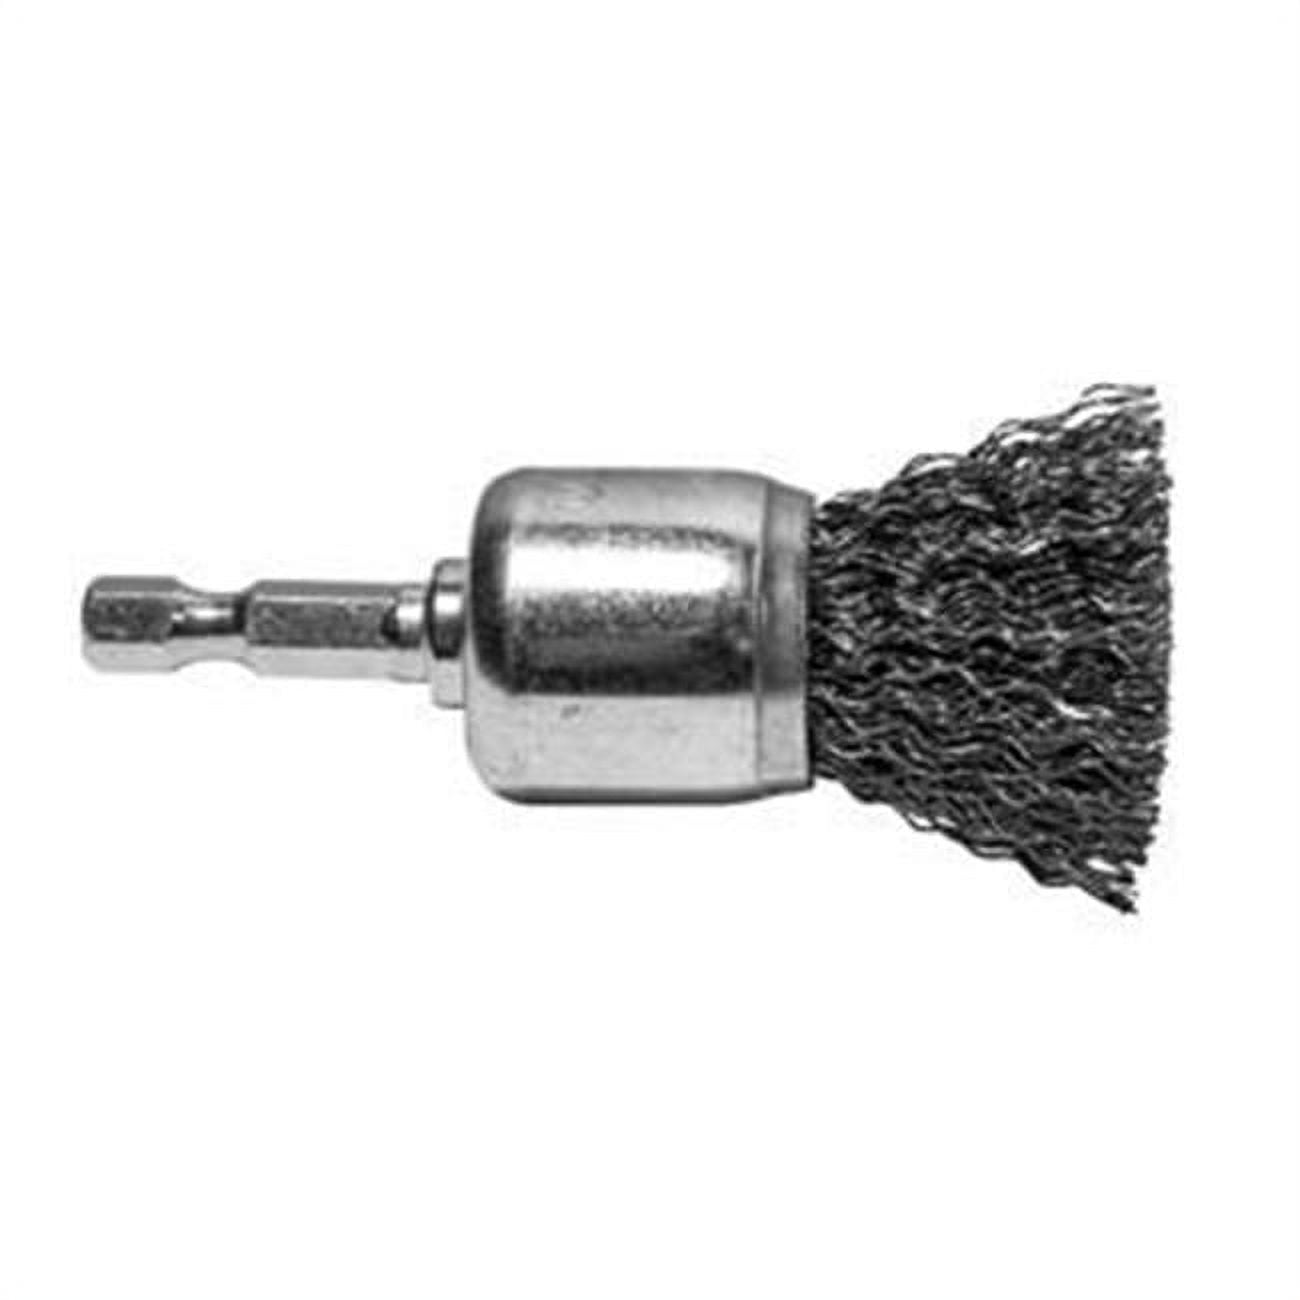 Drillbrush 1025316 4 in. Soft & Medium Bristle Metal Handle Drill